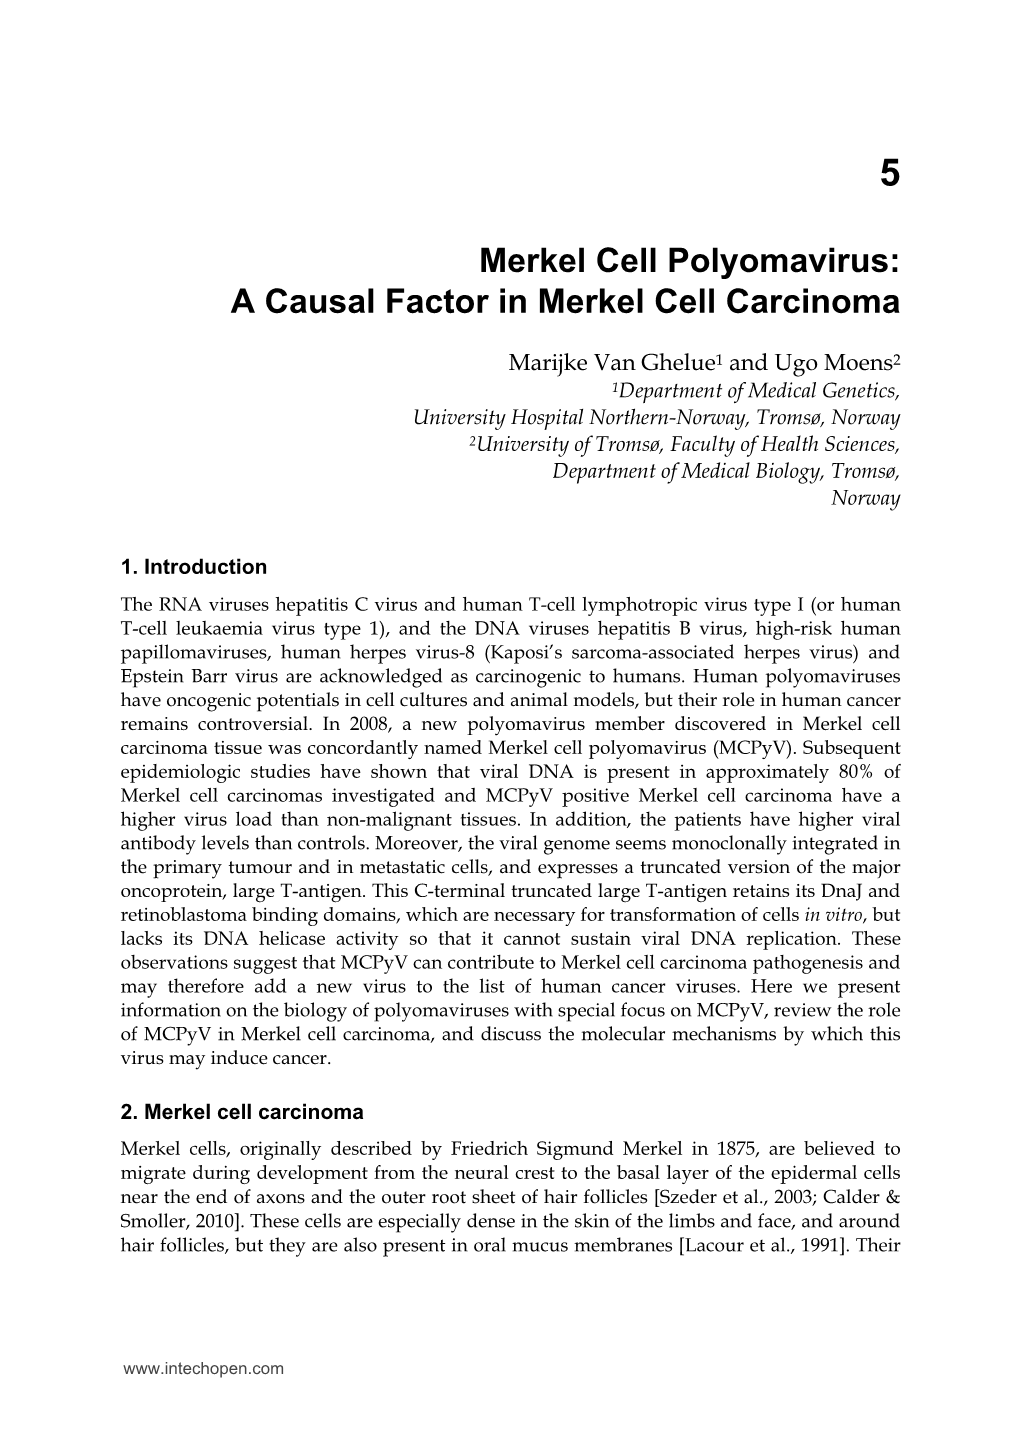 A Causal Factor in Merkel Cell Carcinoma